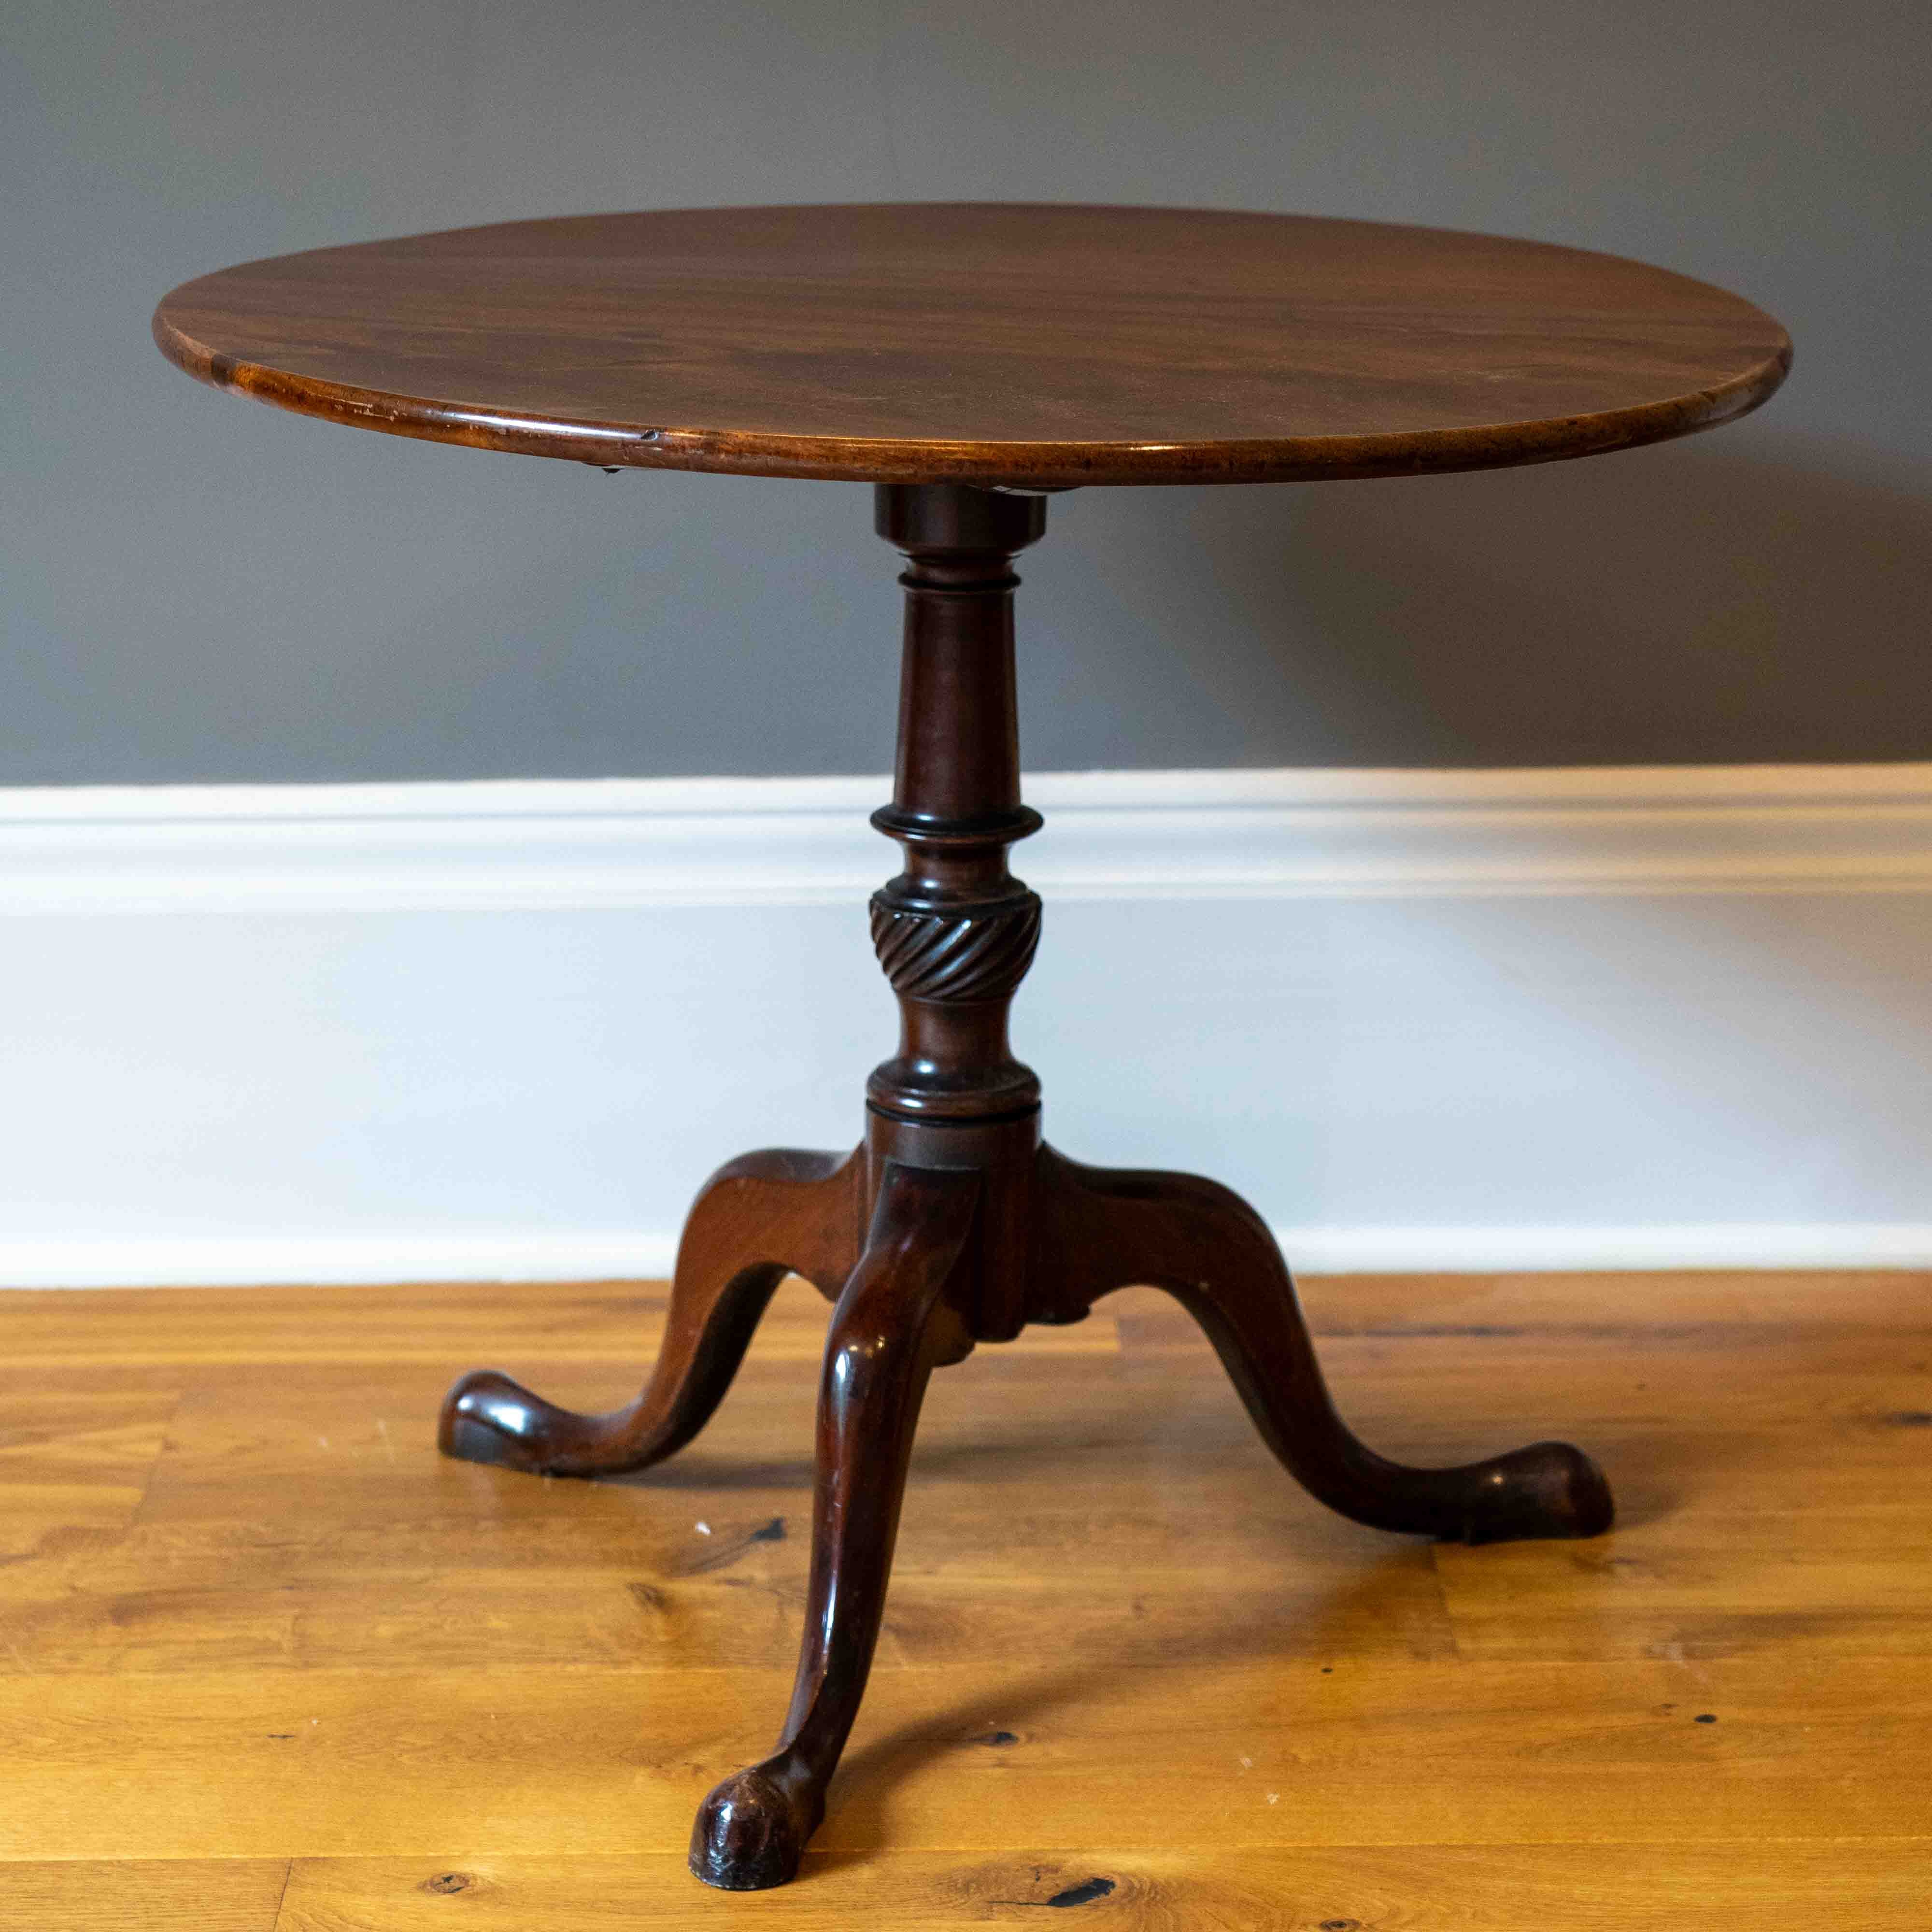 A George III circular mahogany tilt top tripod table, diameter 82cm, height 70cm. Condition - fair